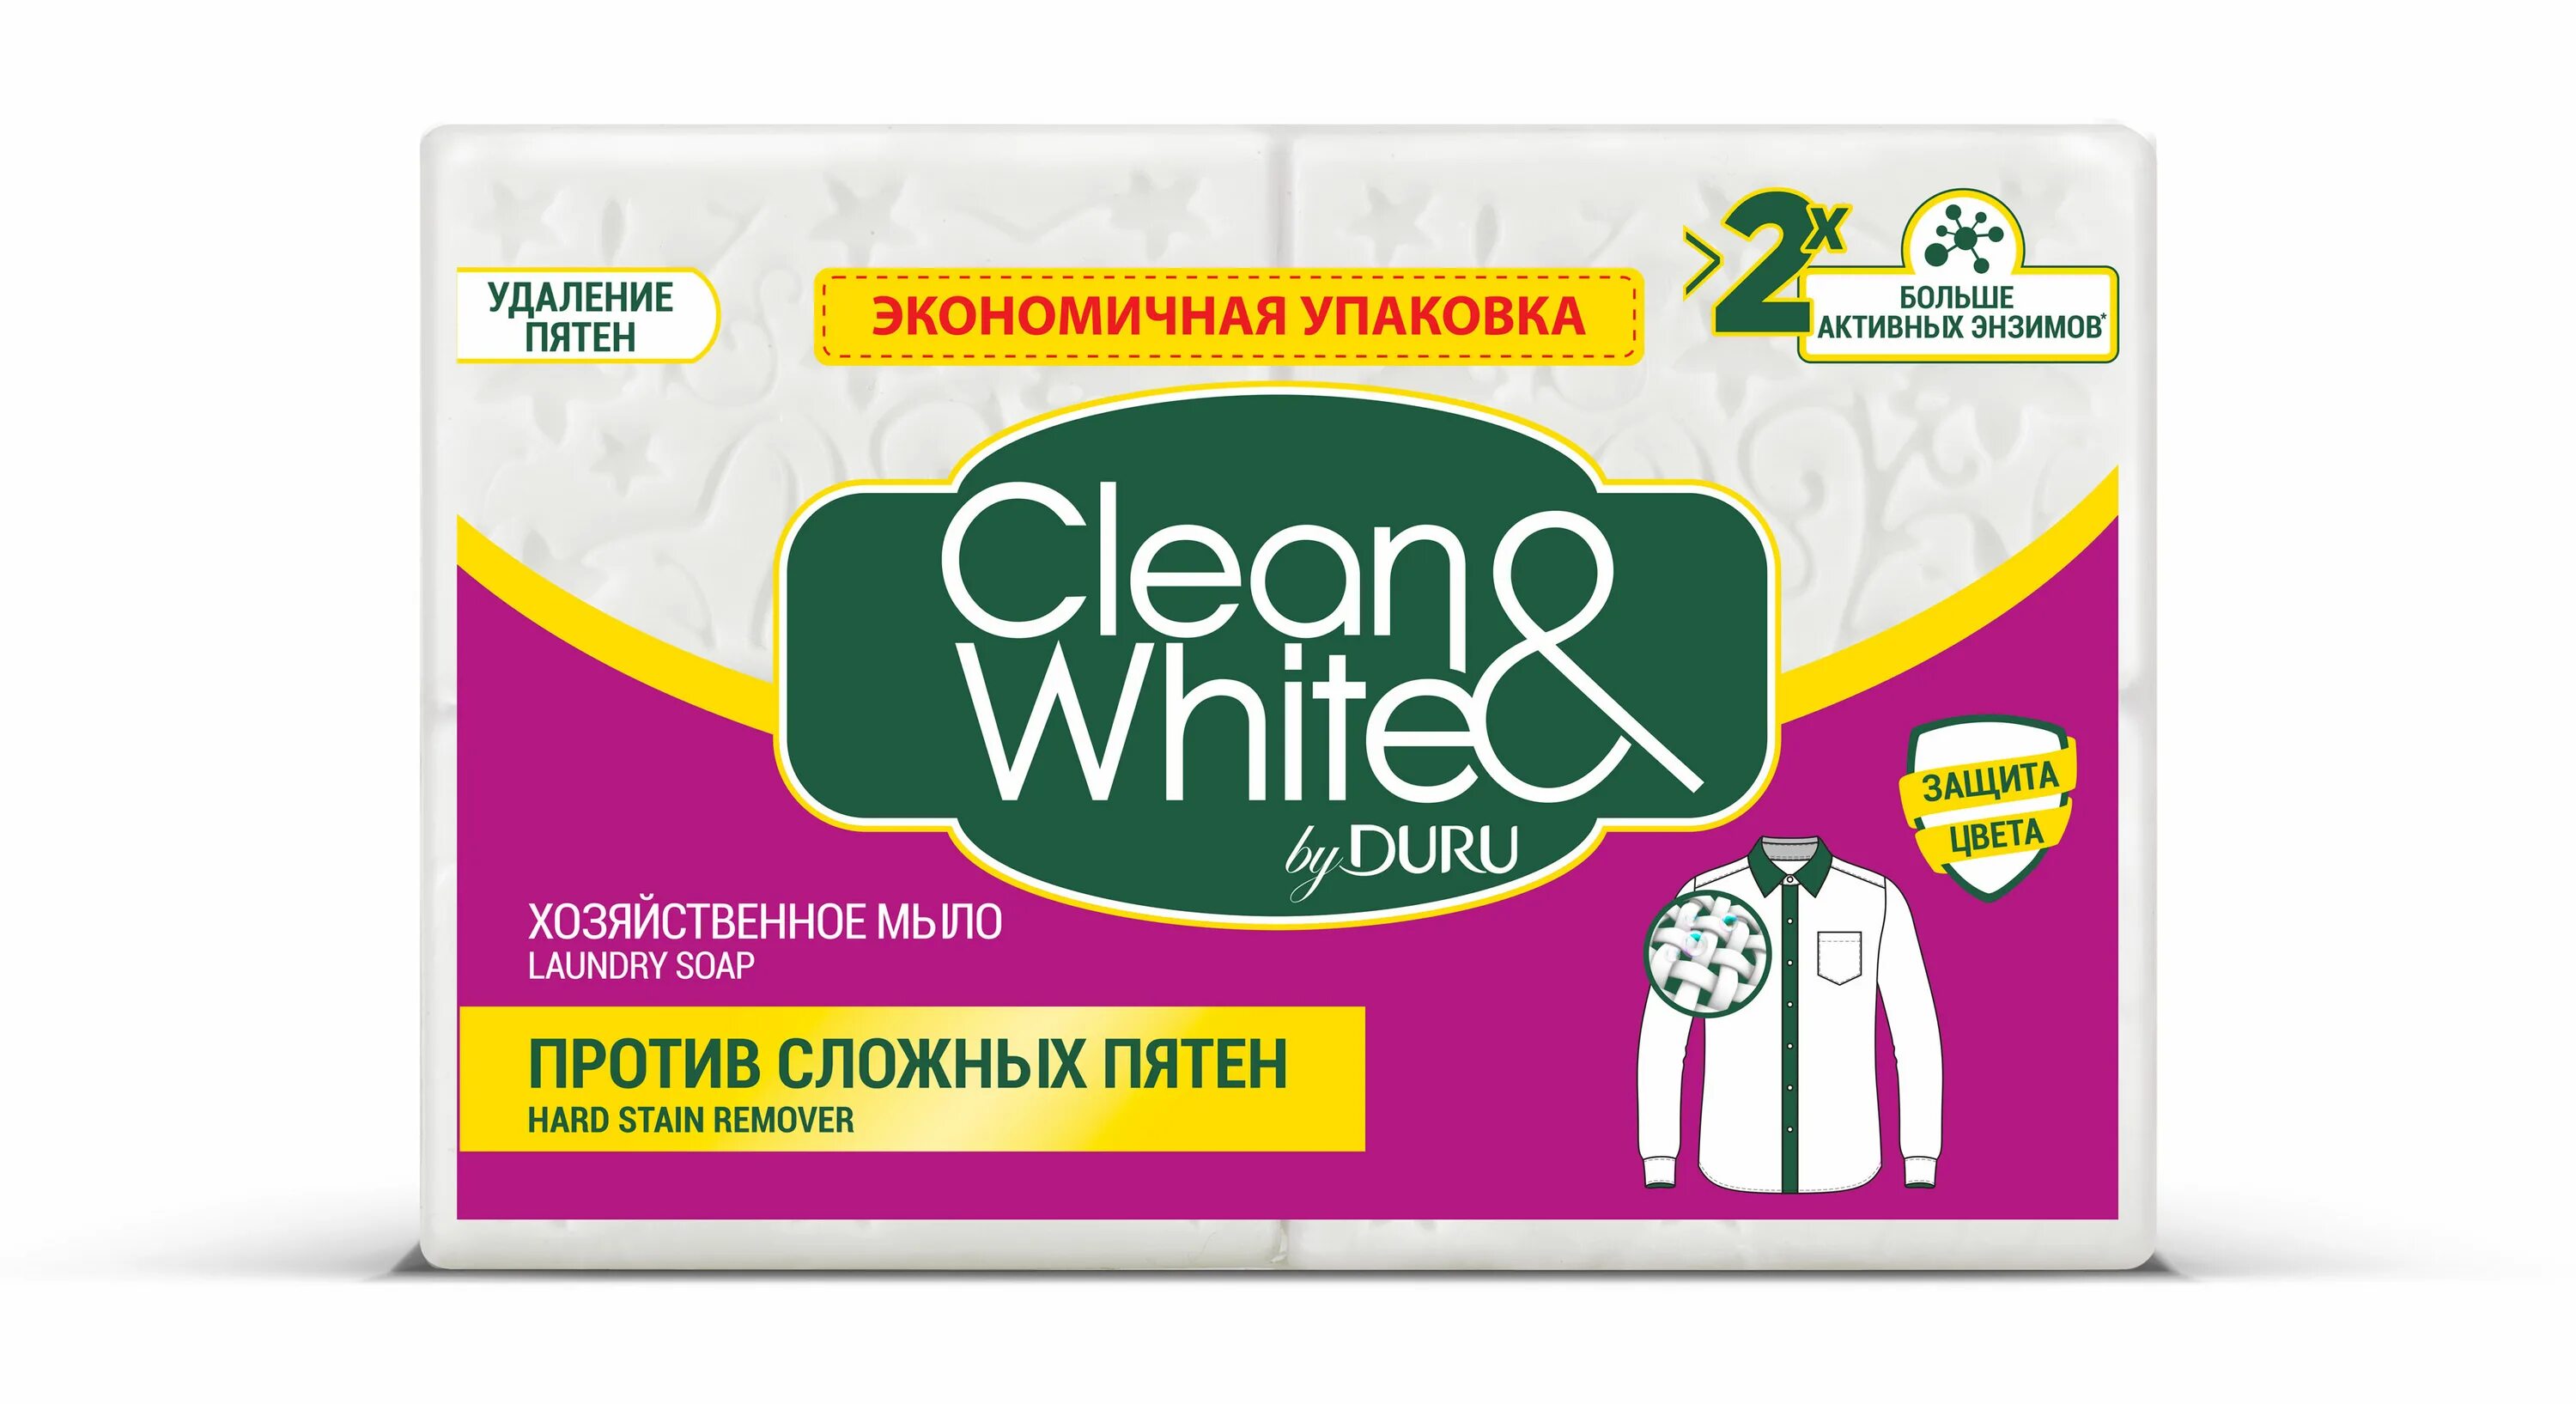 Дуру хозяйственное. Clean&White Duru 125гр. Duru clean&White производитель. Мыло хозяйственное Duru clean White. Мыло хозяйственное Duru clean&White против сложных пятен 120г.